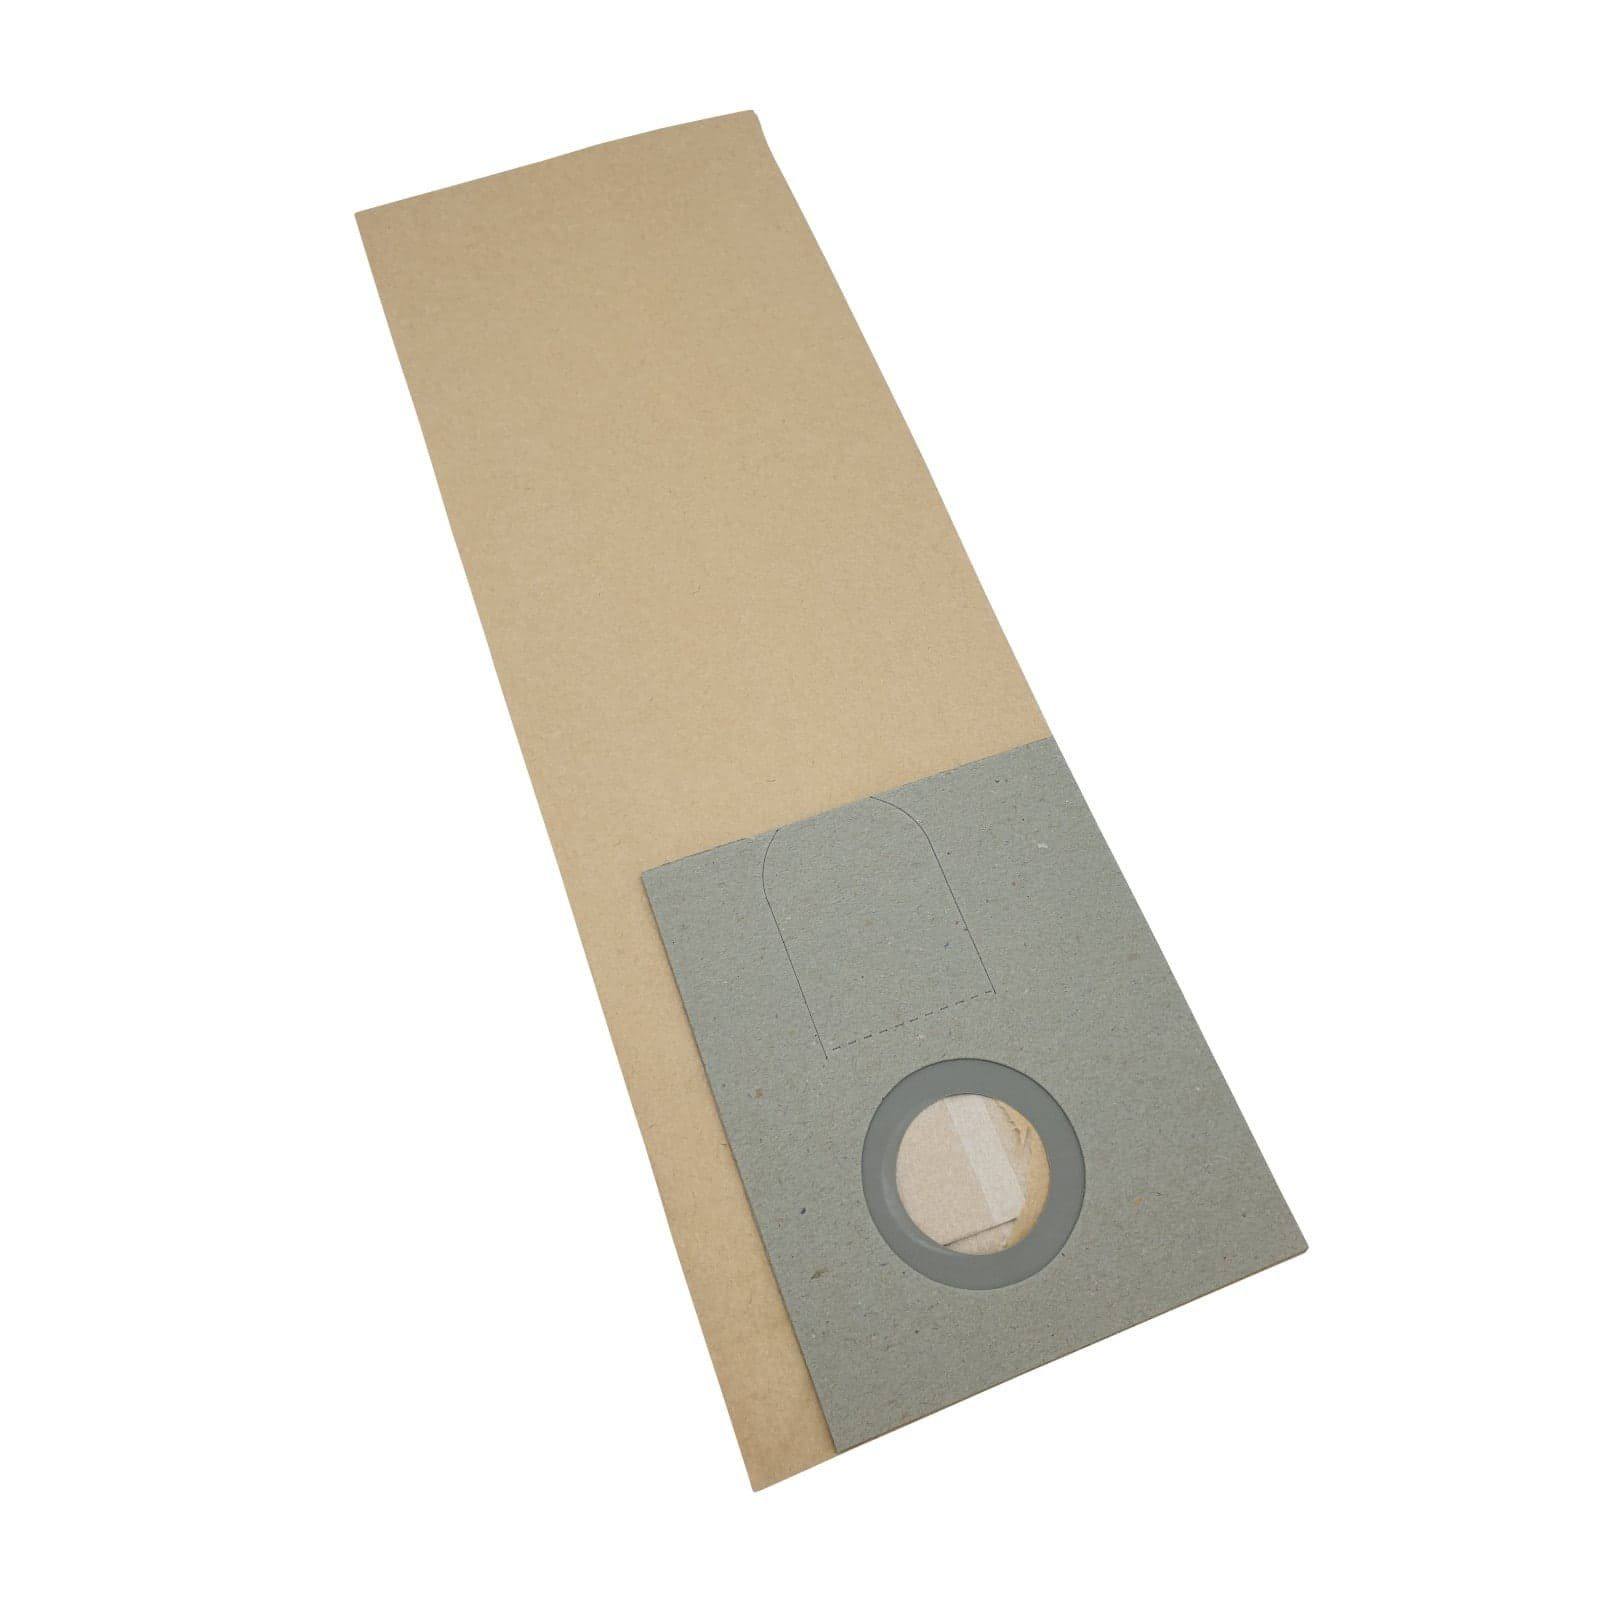 Reinica Staubsaugerbeutel passend für Clean a la Card UP 350, 10er-Pack Staubbeutel Saugerbeutel Beutel Filtertüten